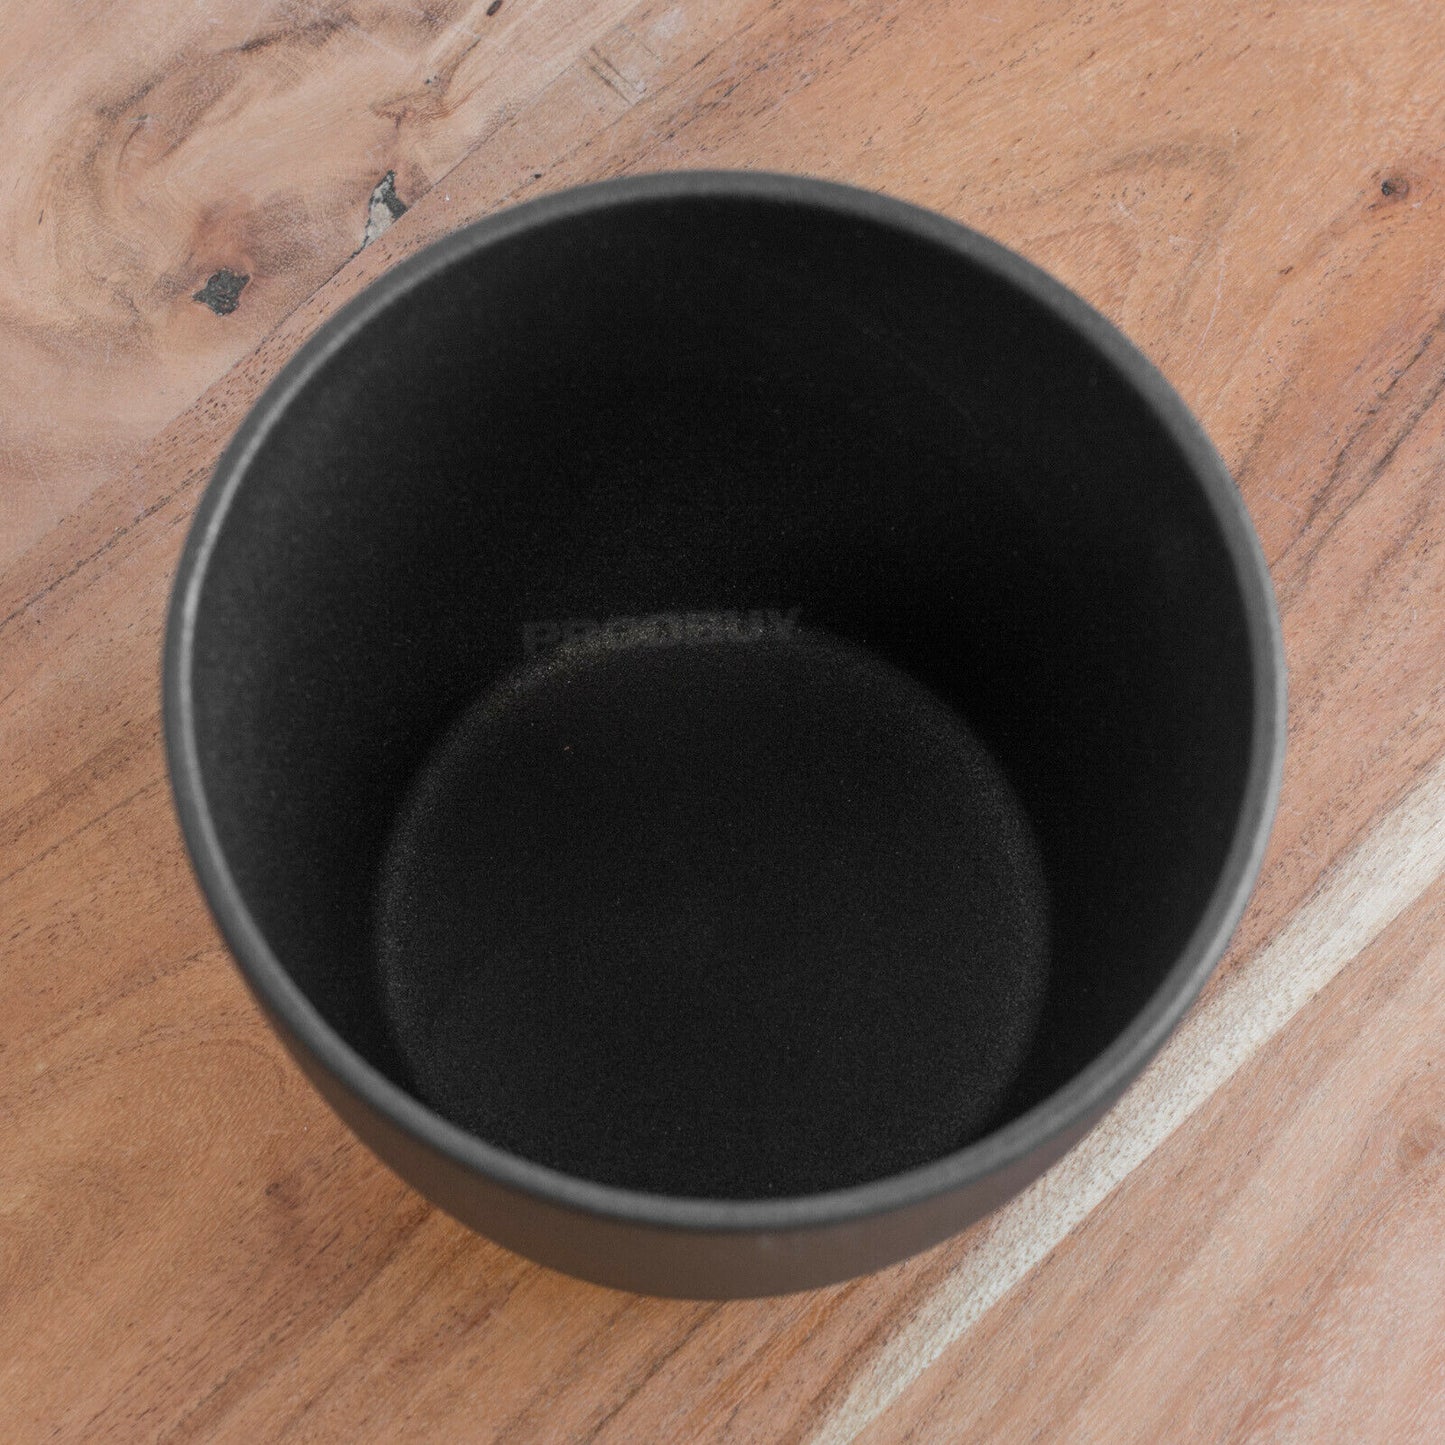 Small 12cm Plain Ceramic Plant Pot Cover